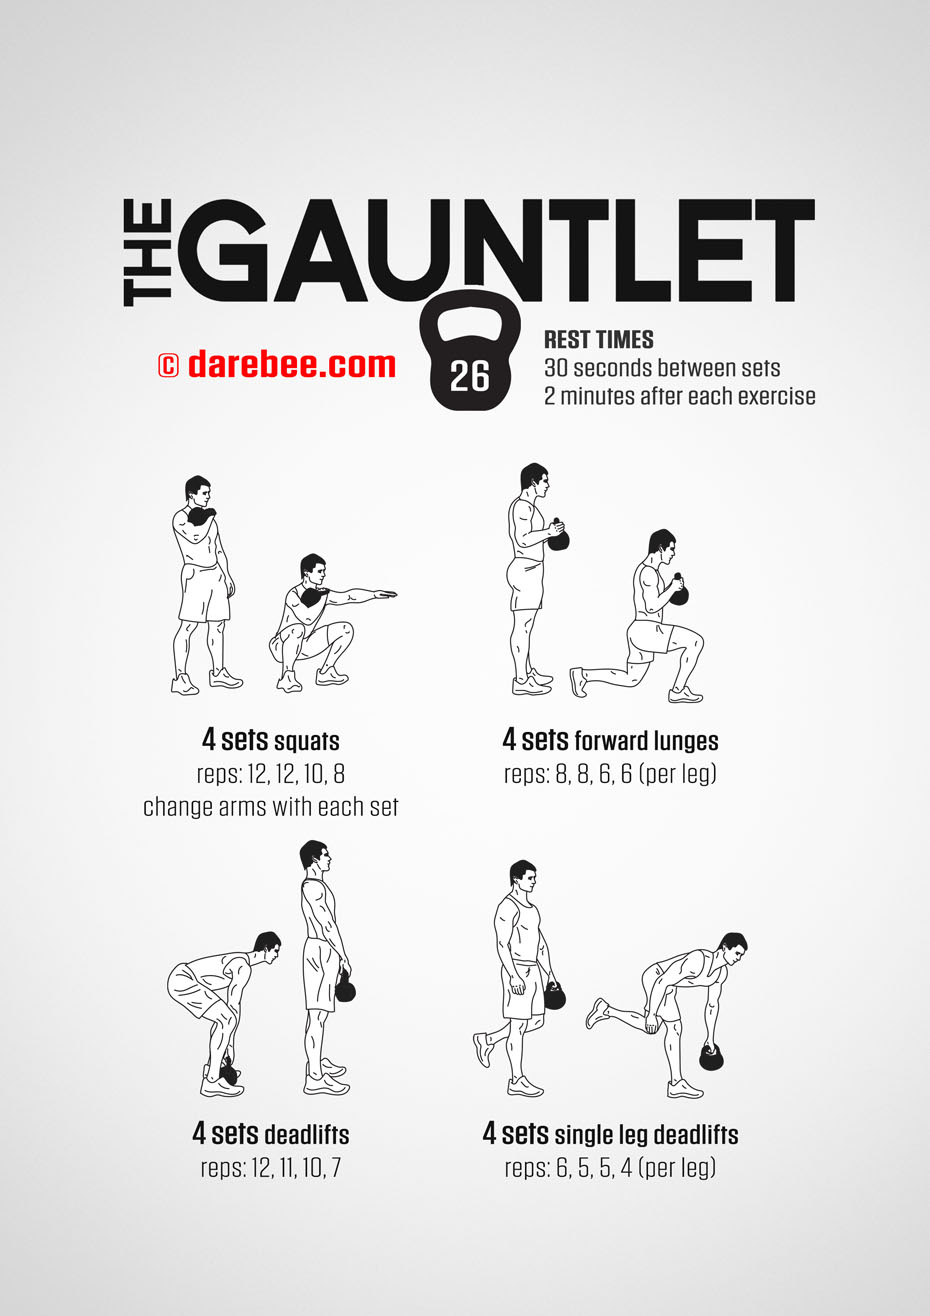 The Gauntlet - Kettlebell Fitness Program by DAREBEE